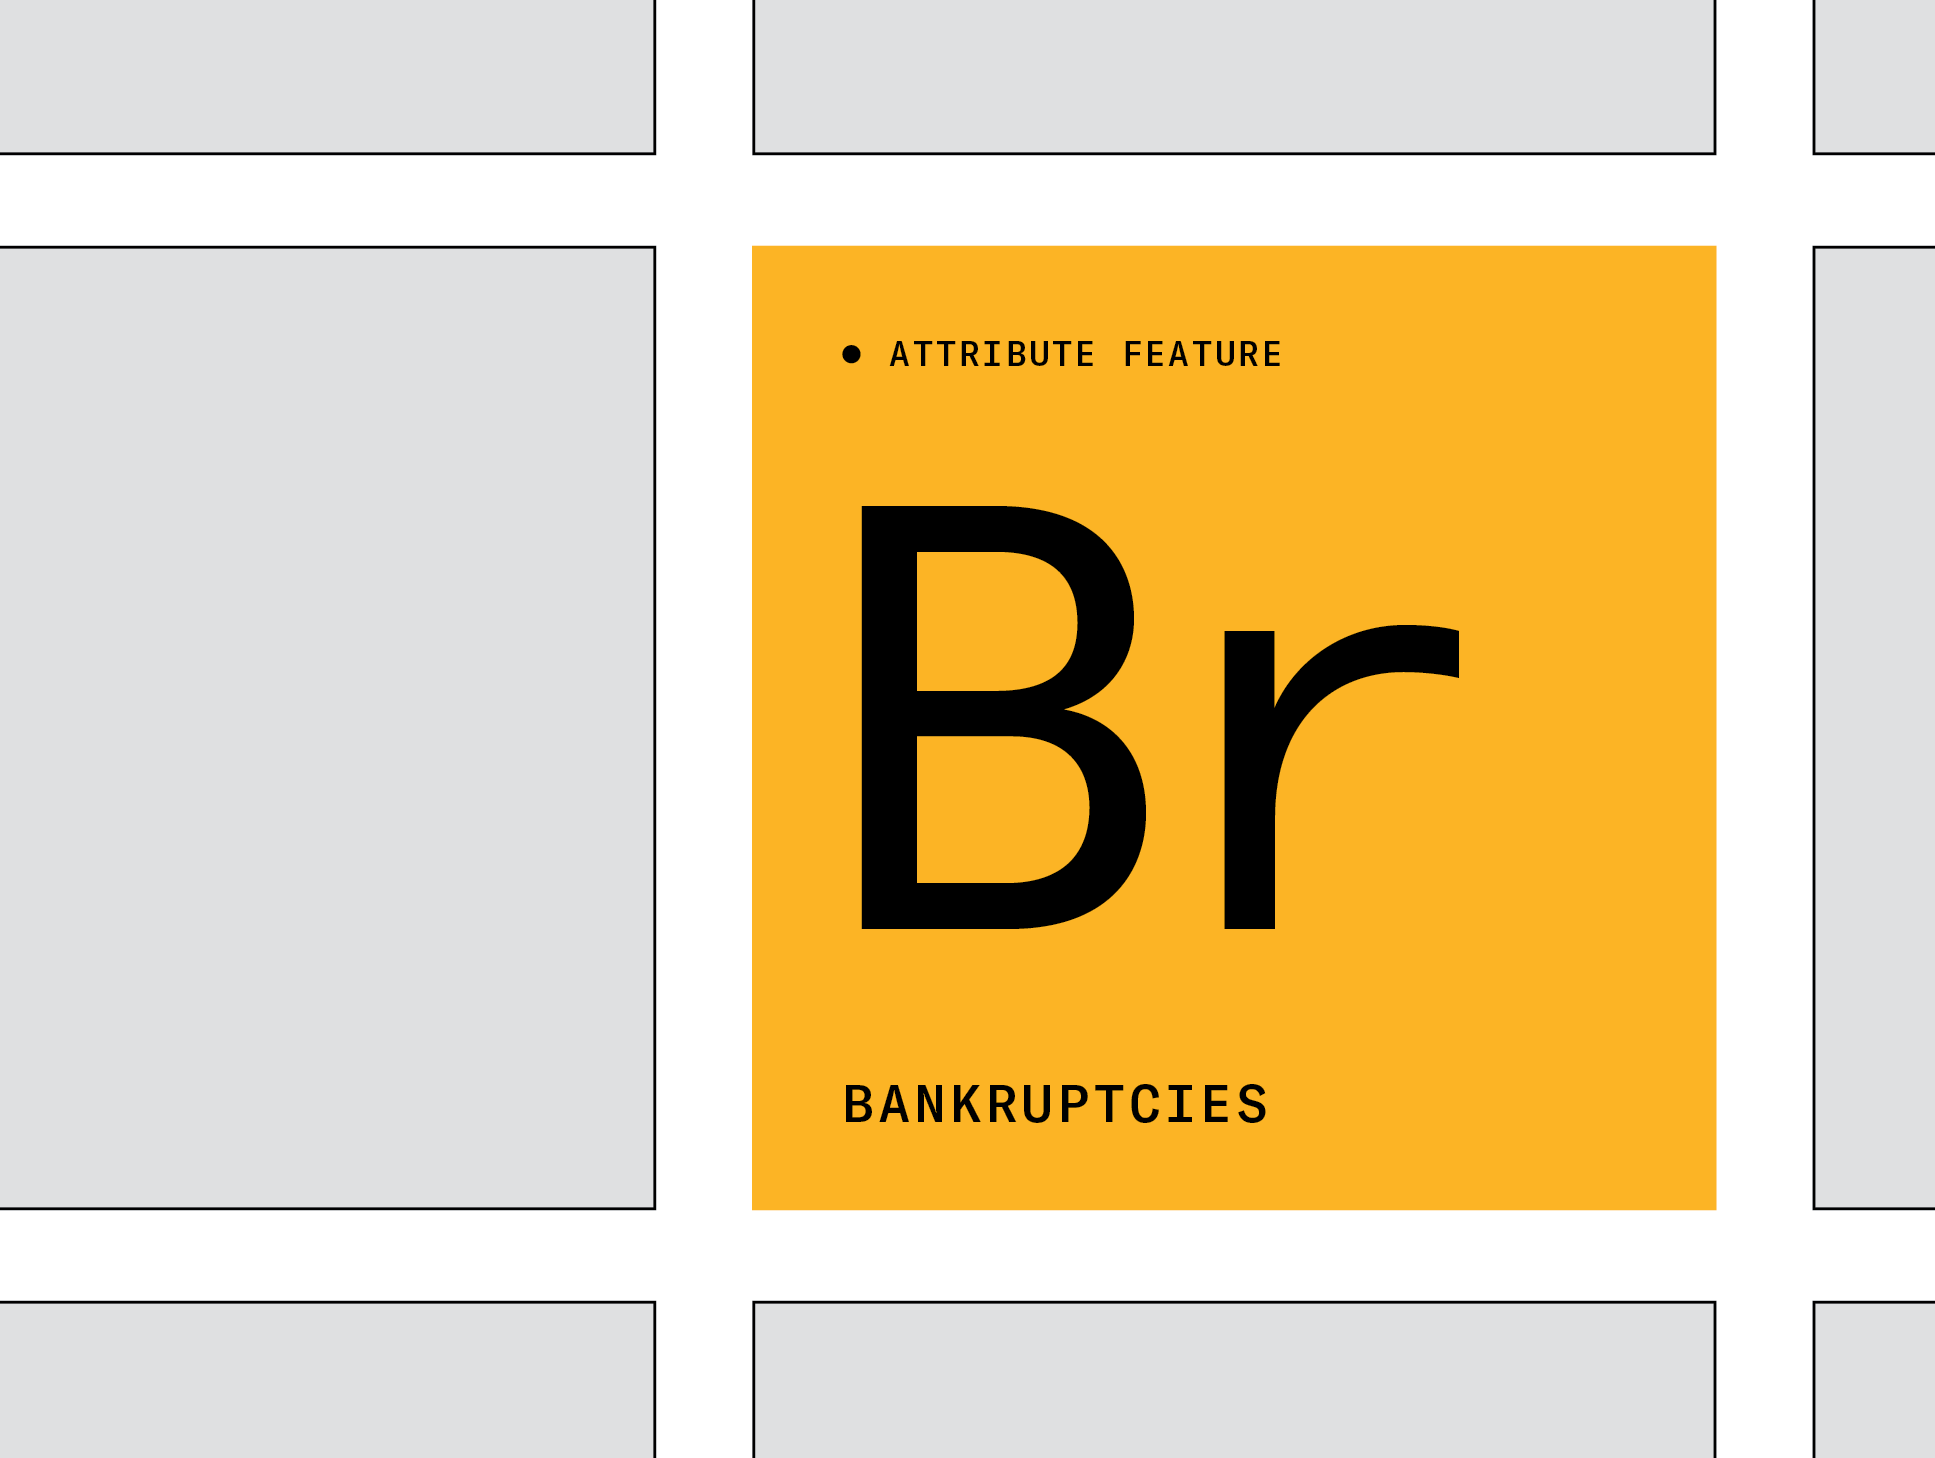 Thumbnail of business bankruptcies image